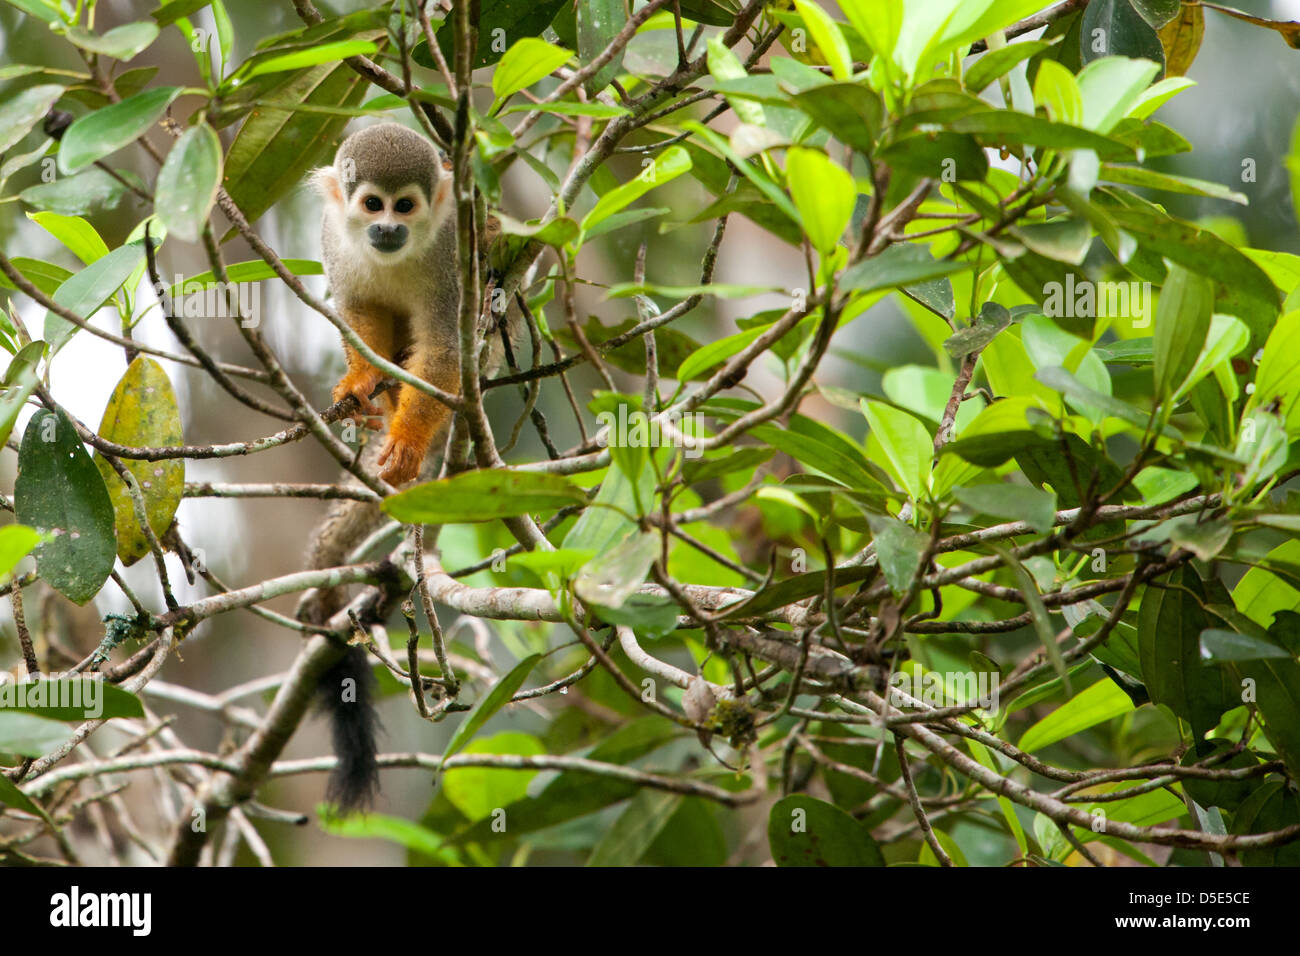 An Ecuadorian Squirrel Monkey (Saimiri cassiquiarensis macrodon) Stock Photo